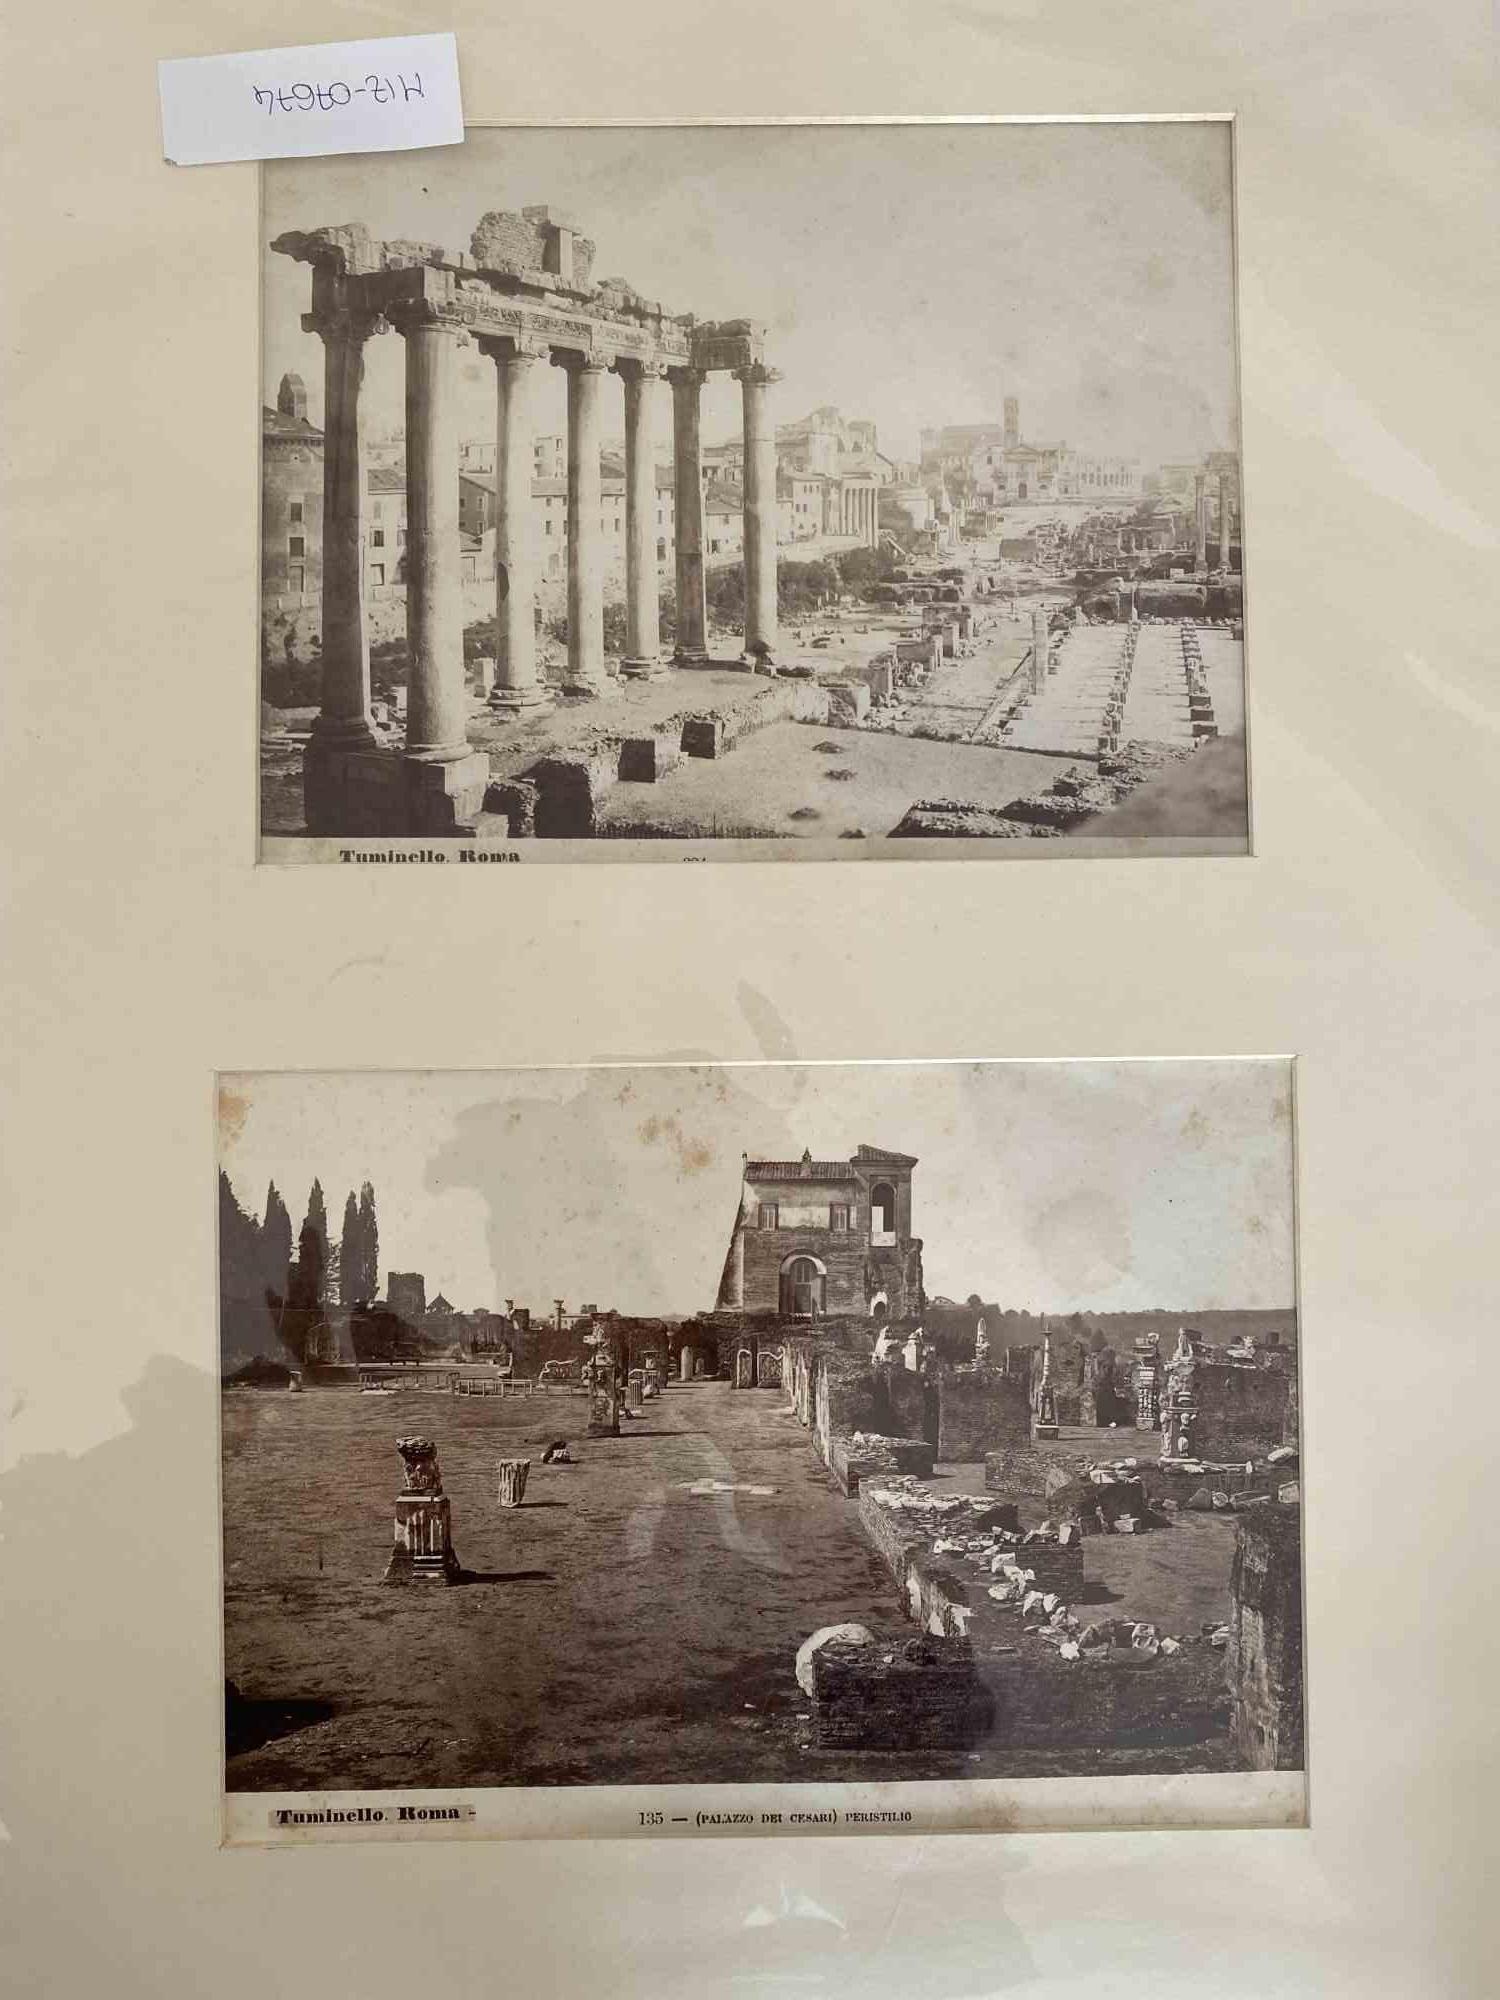 View of Monuments Of Rome - Original Photograph by L. Tuminello - 19th Century - Brown Landscape Photograph by Lodovico Tuminello